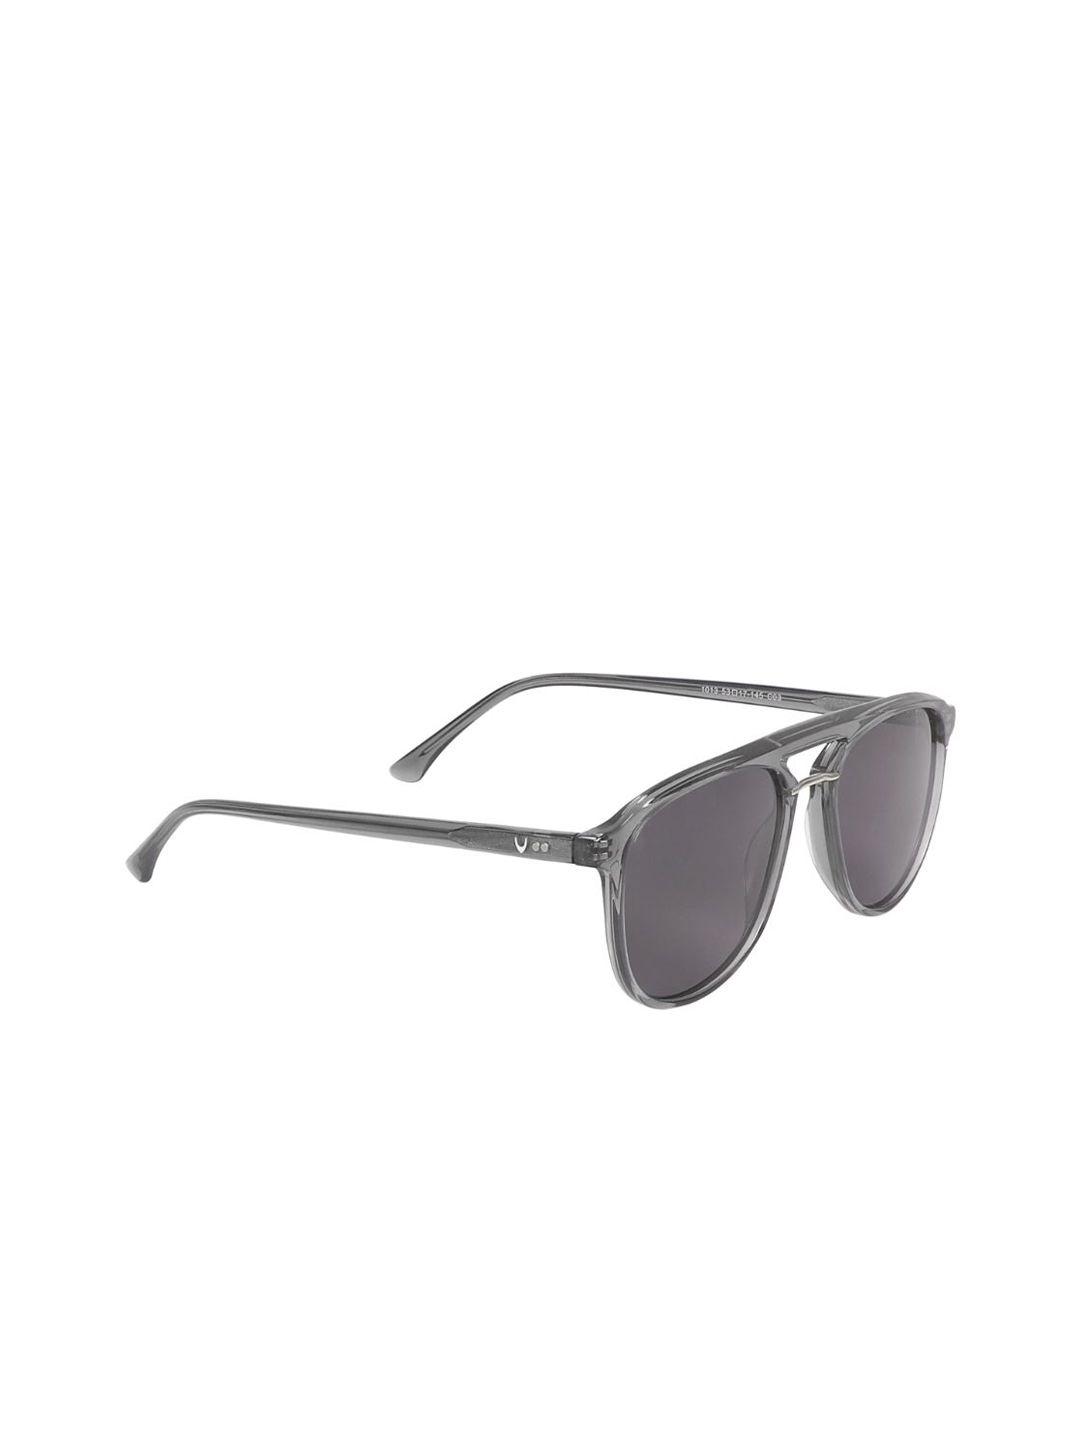 hidesign unisex grey lens & gunmetal-toned sunglasses with uv protected lens - 8903439843625